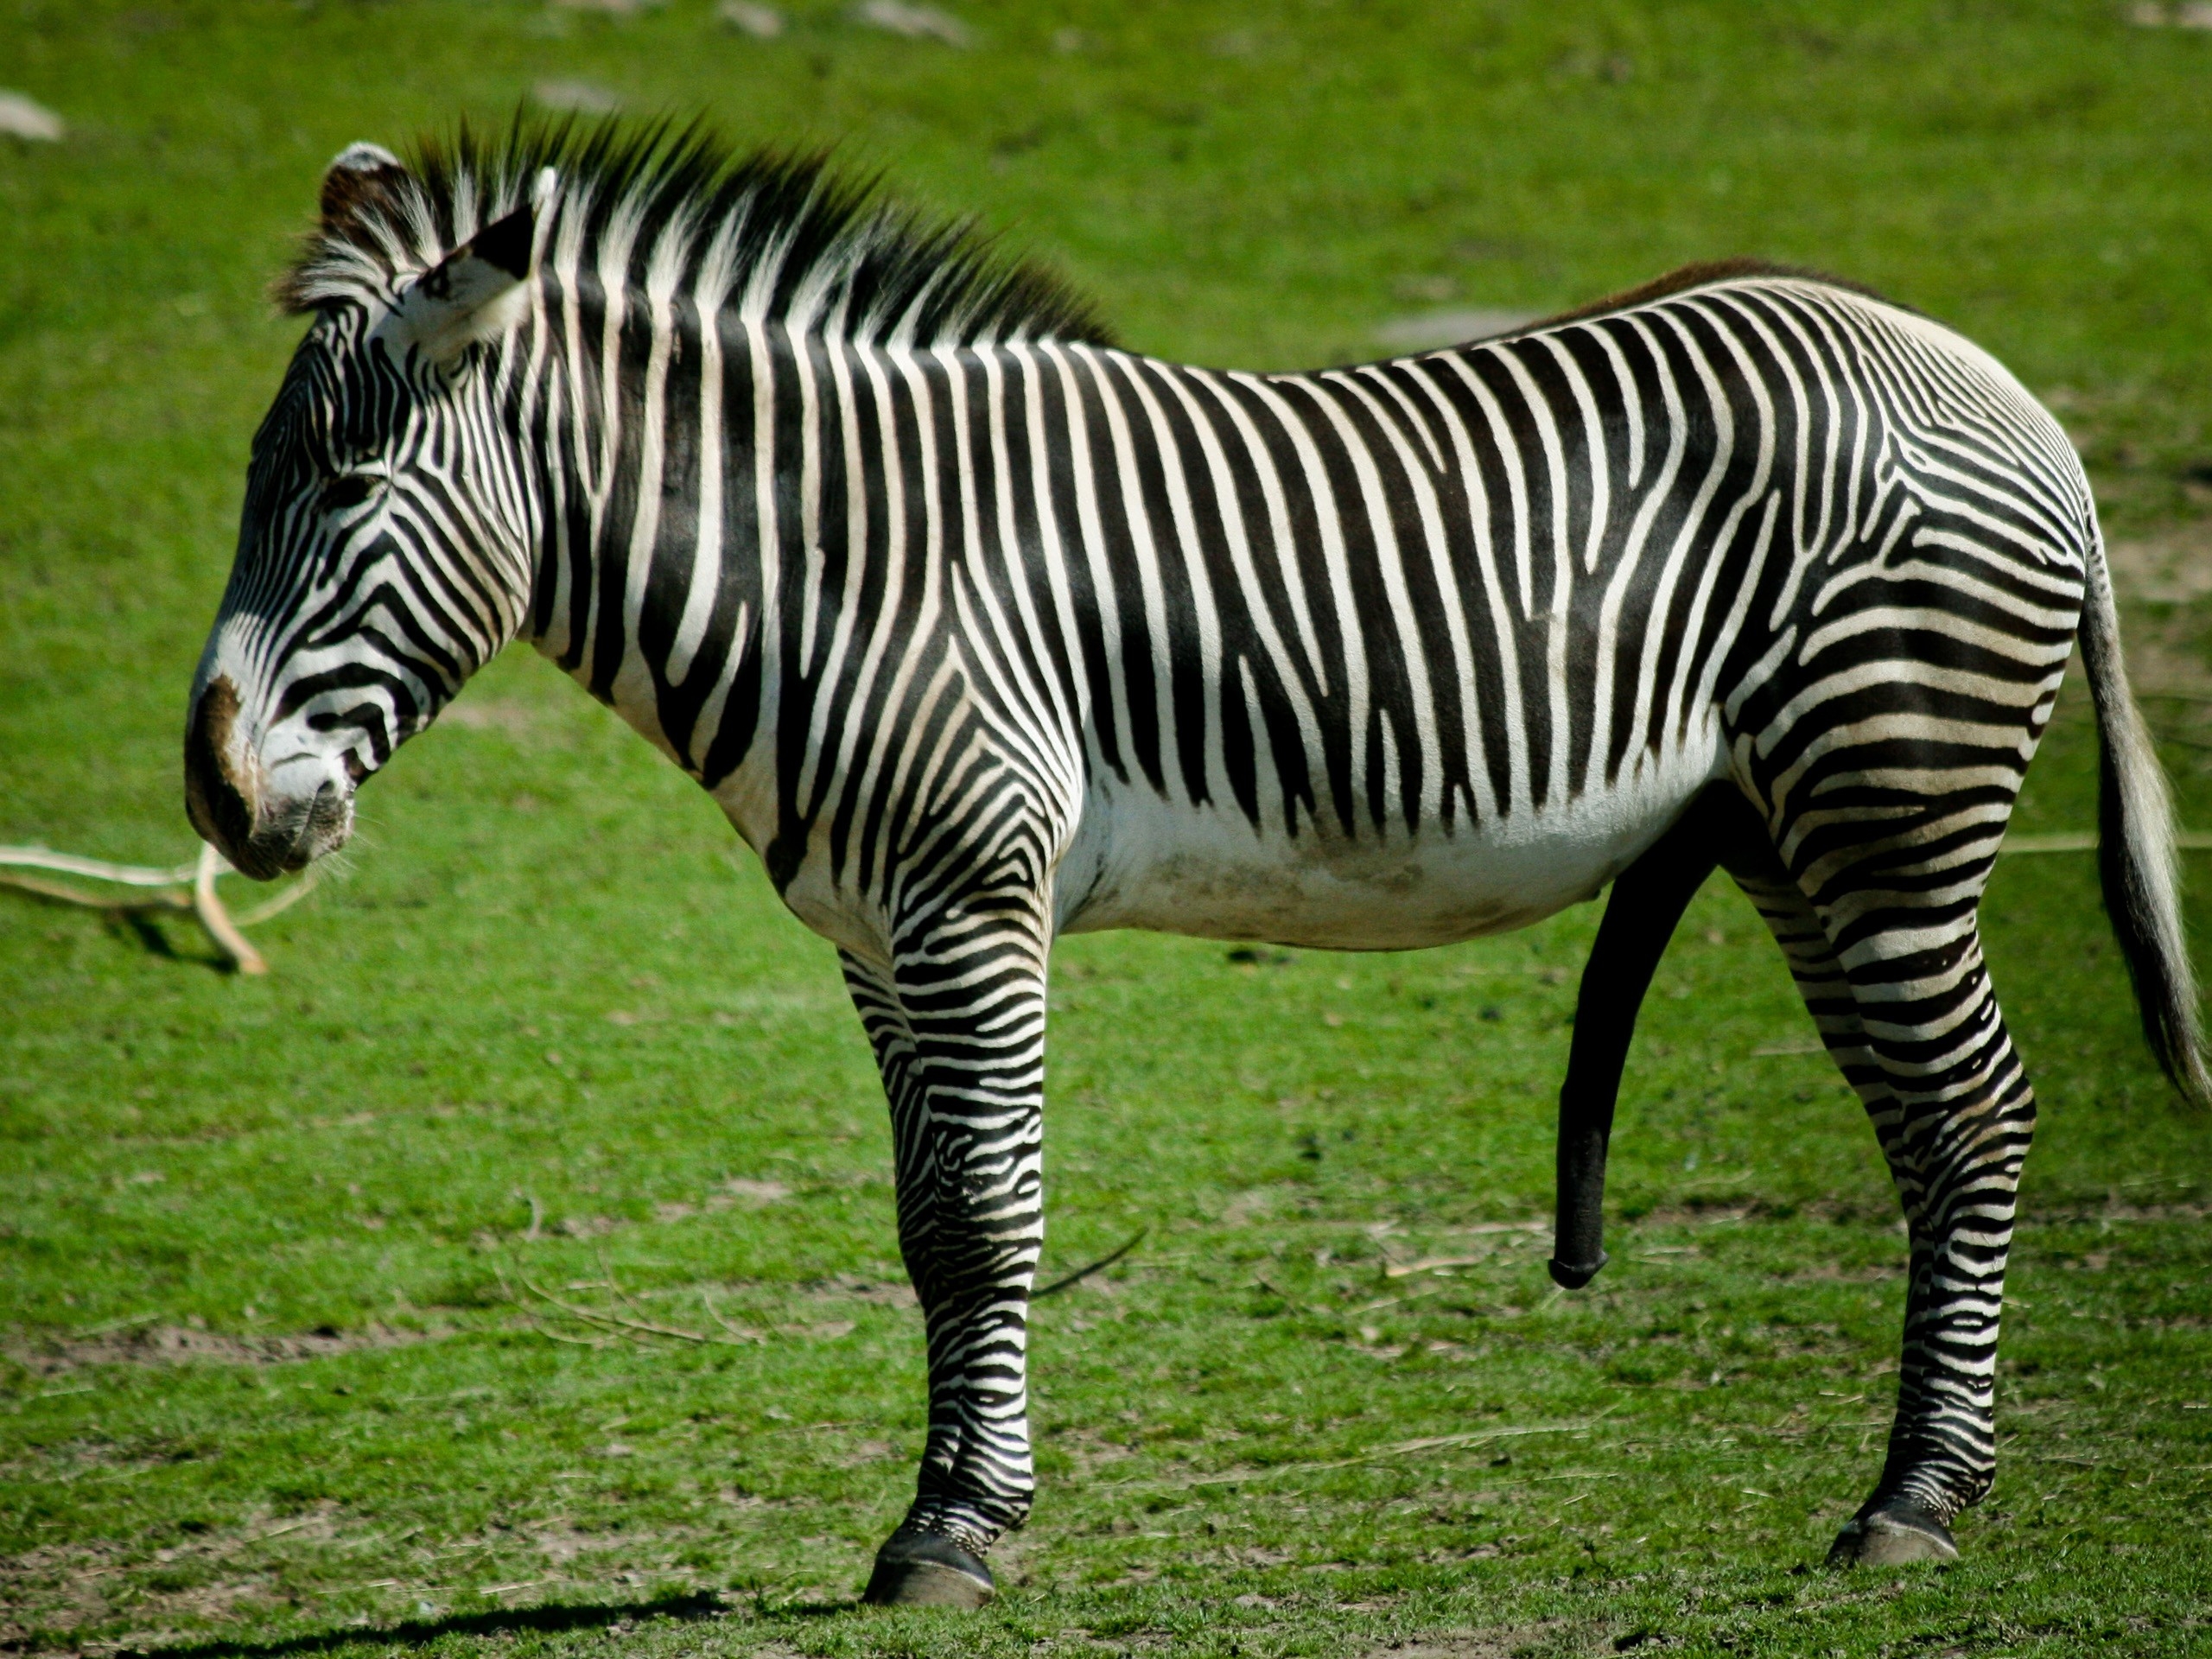 animals, grass, zebra, striped, to stand, stand